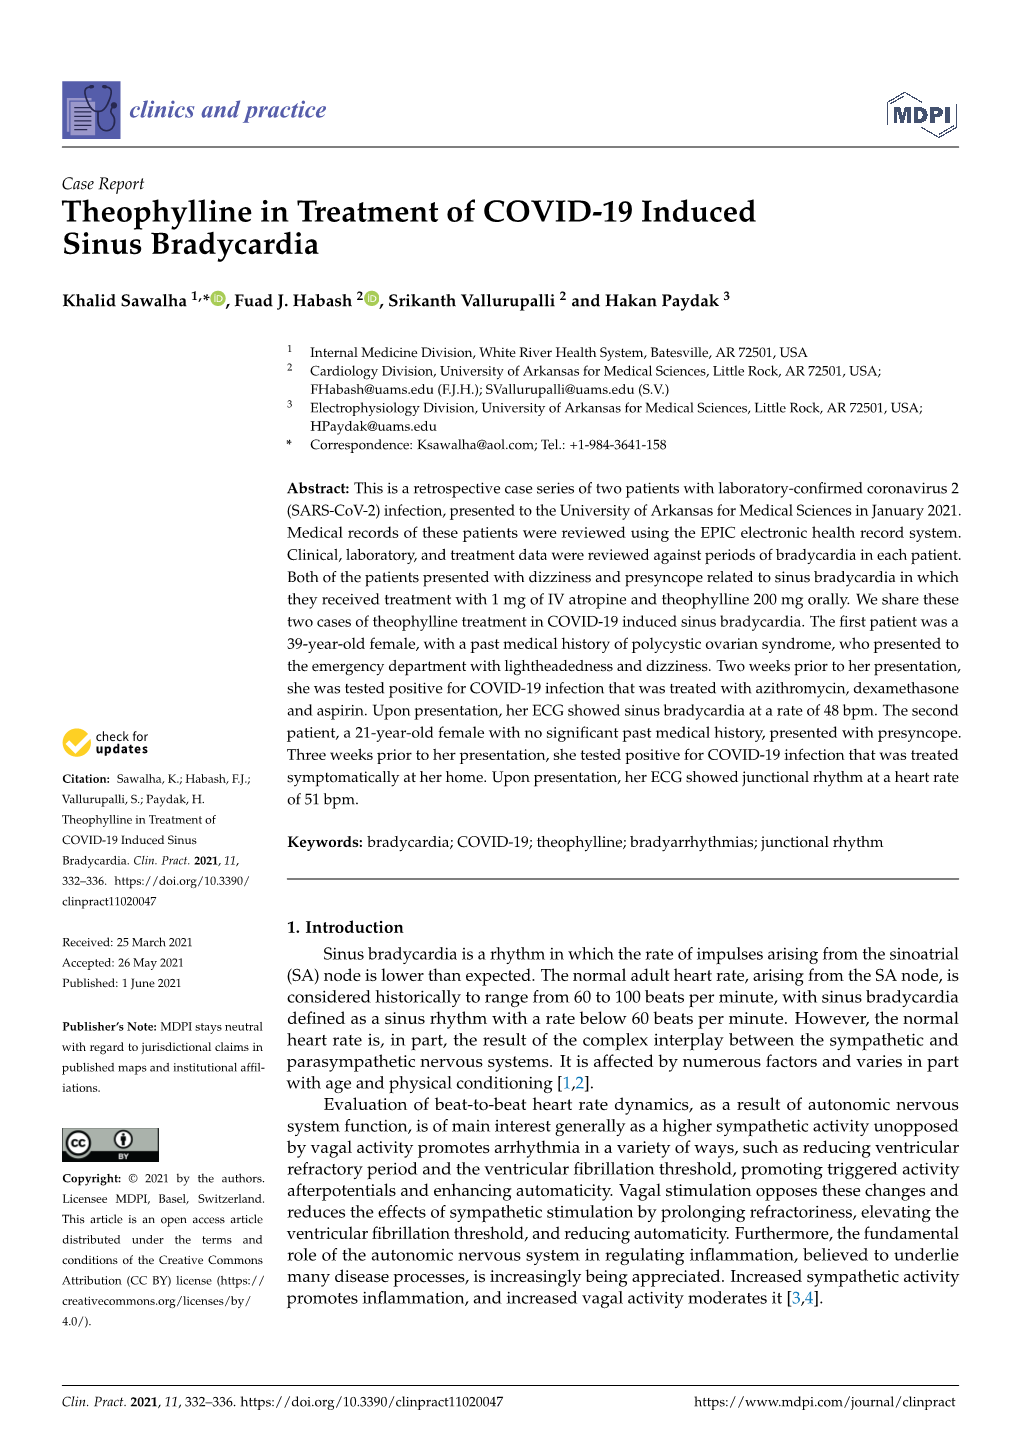 Theophylline in Treatment of COVID-19 Induced Sinus Bradycardia